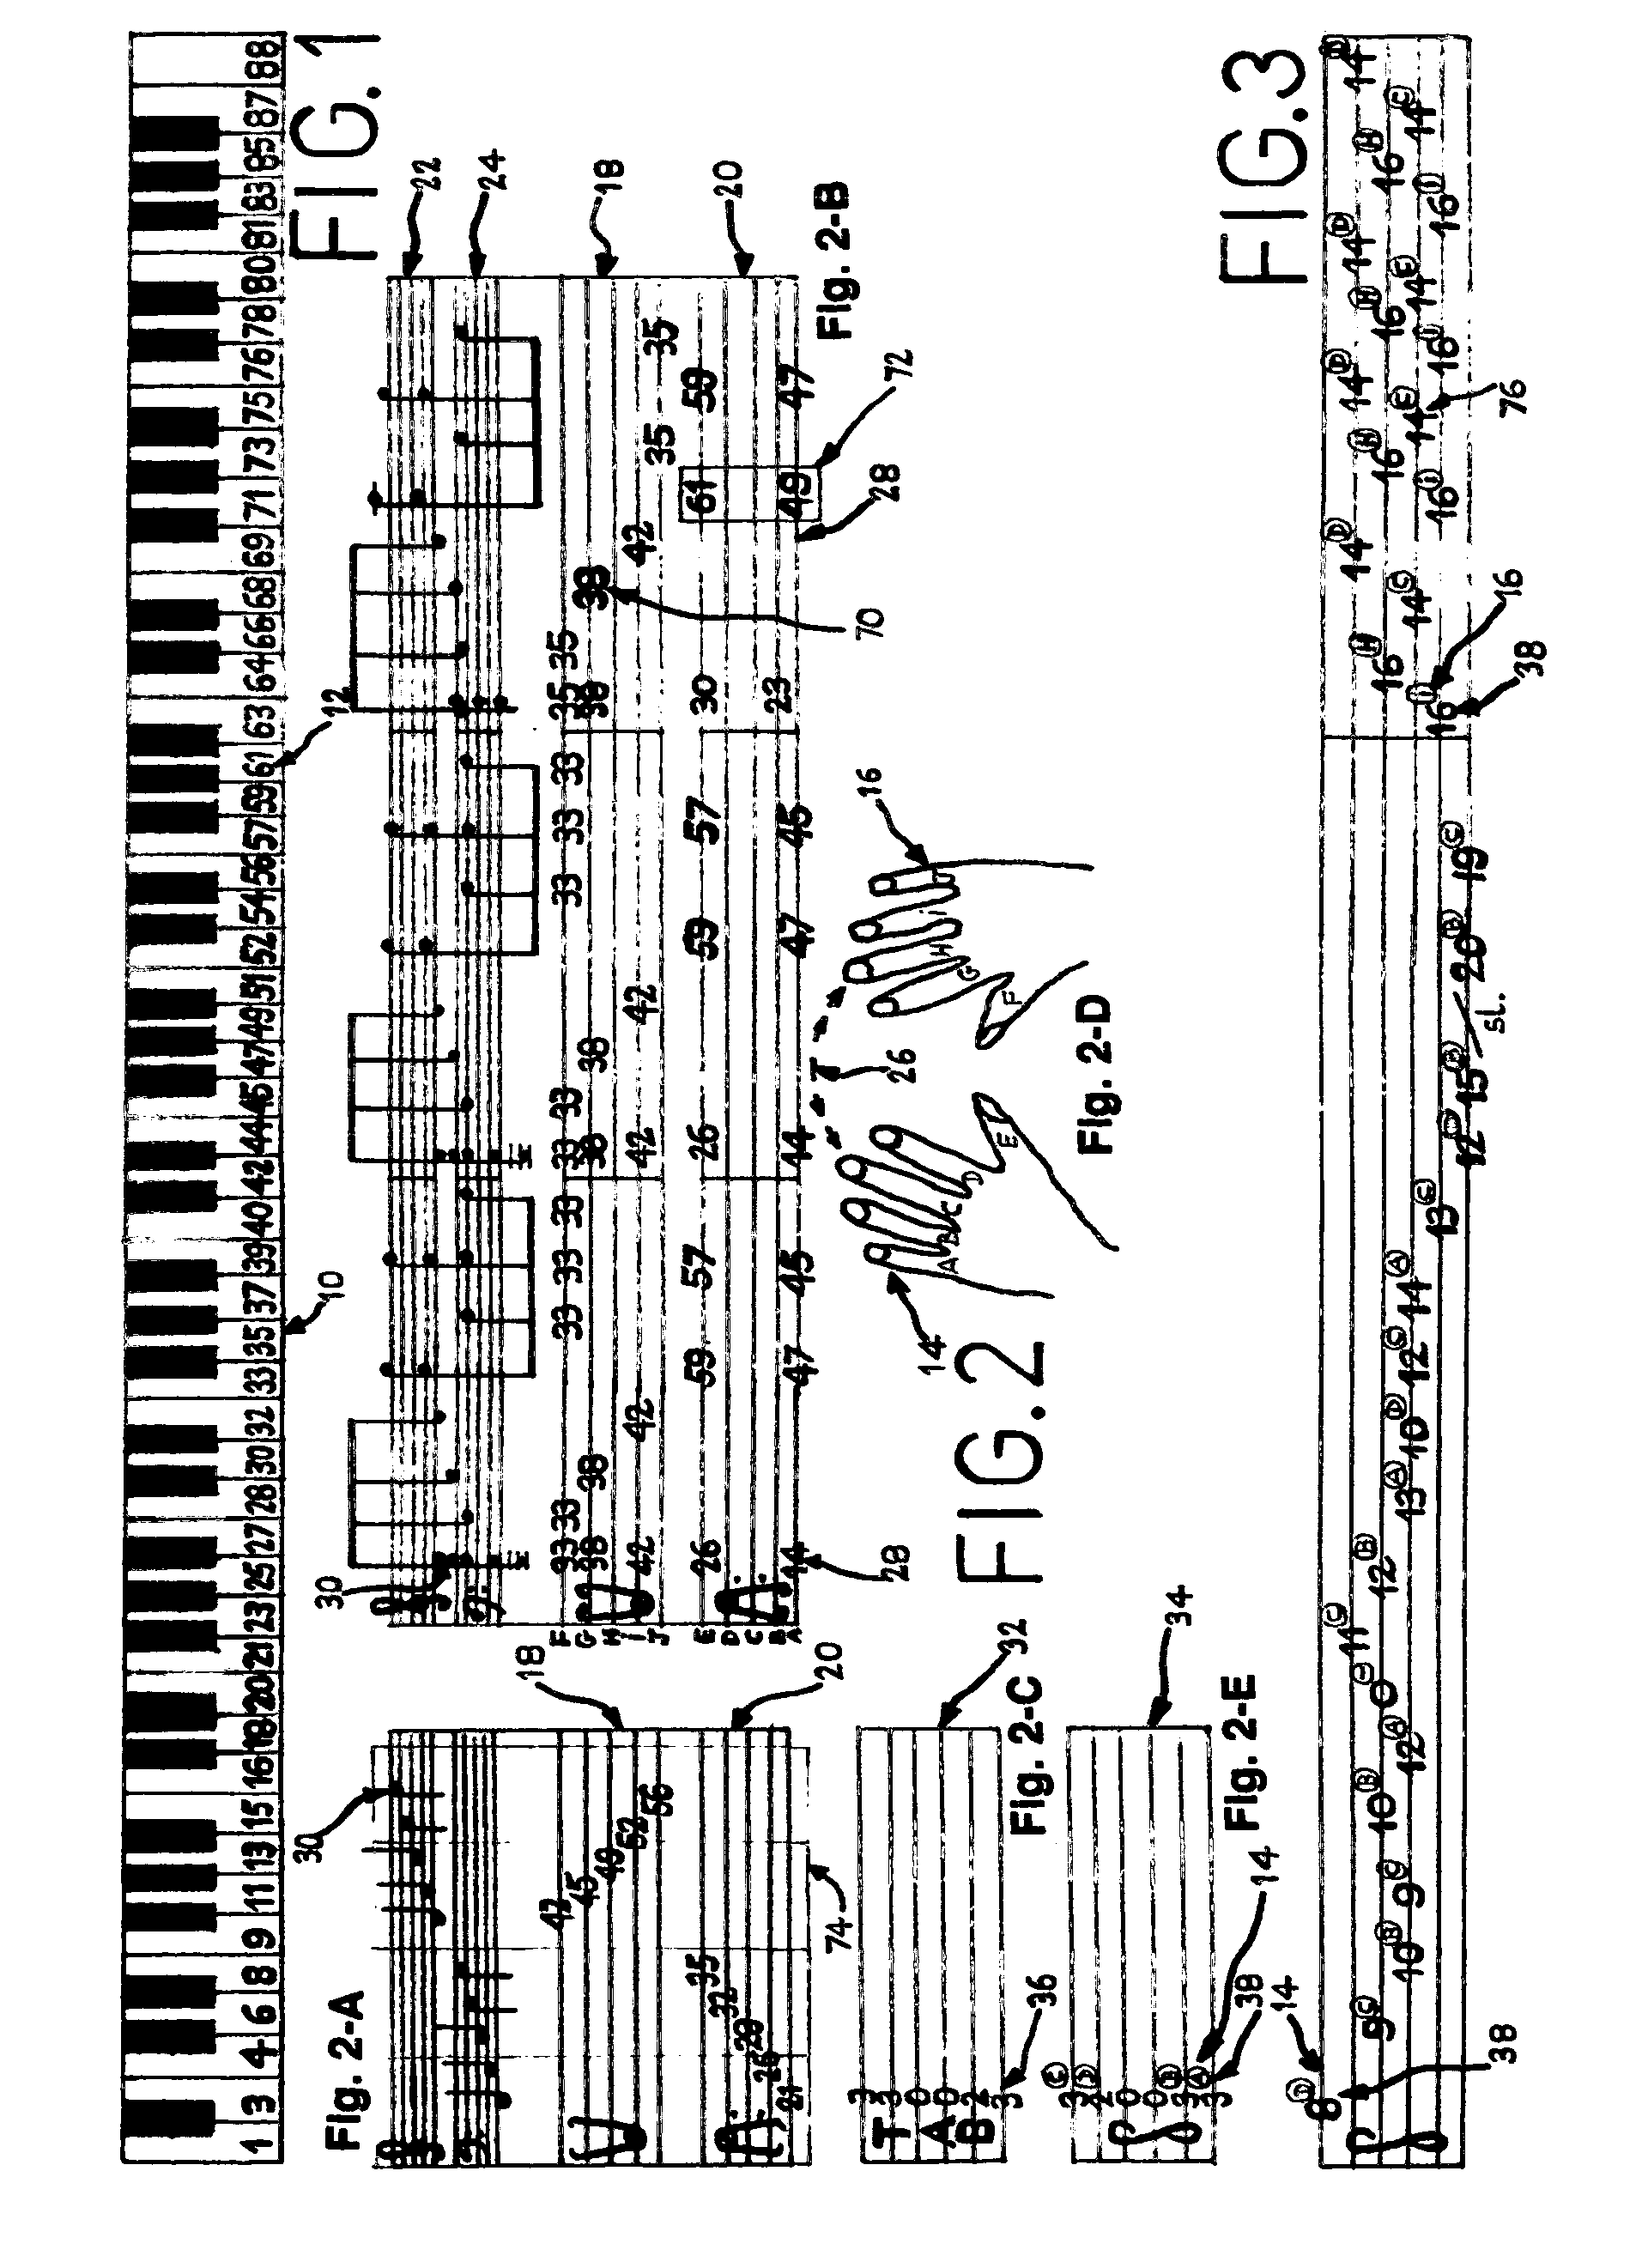 Morpheus music notation system